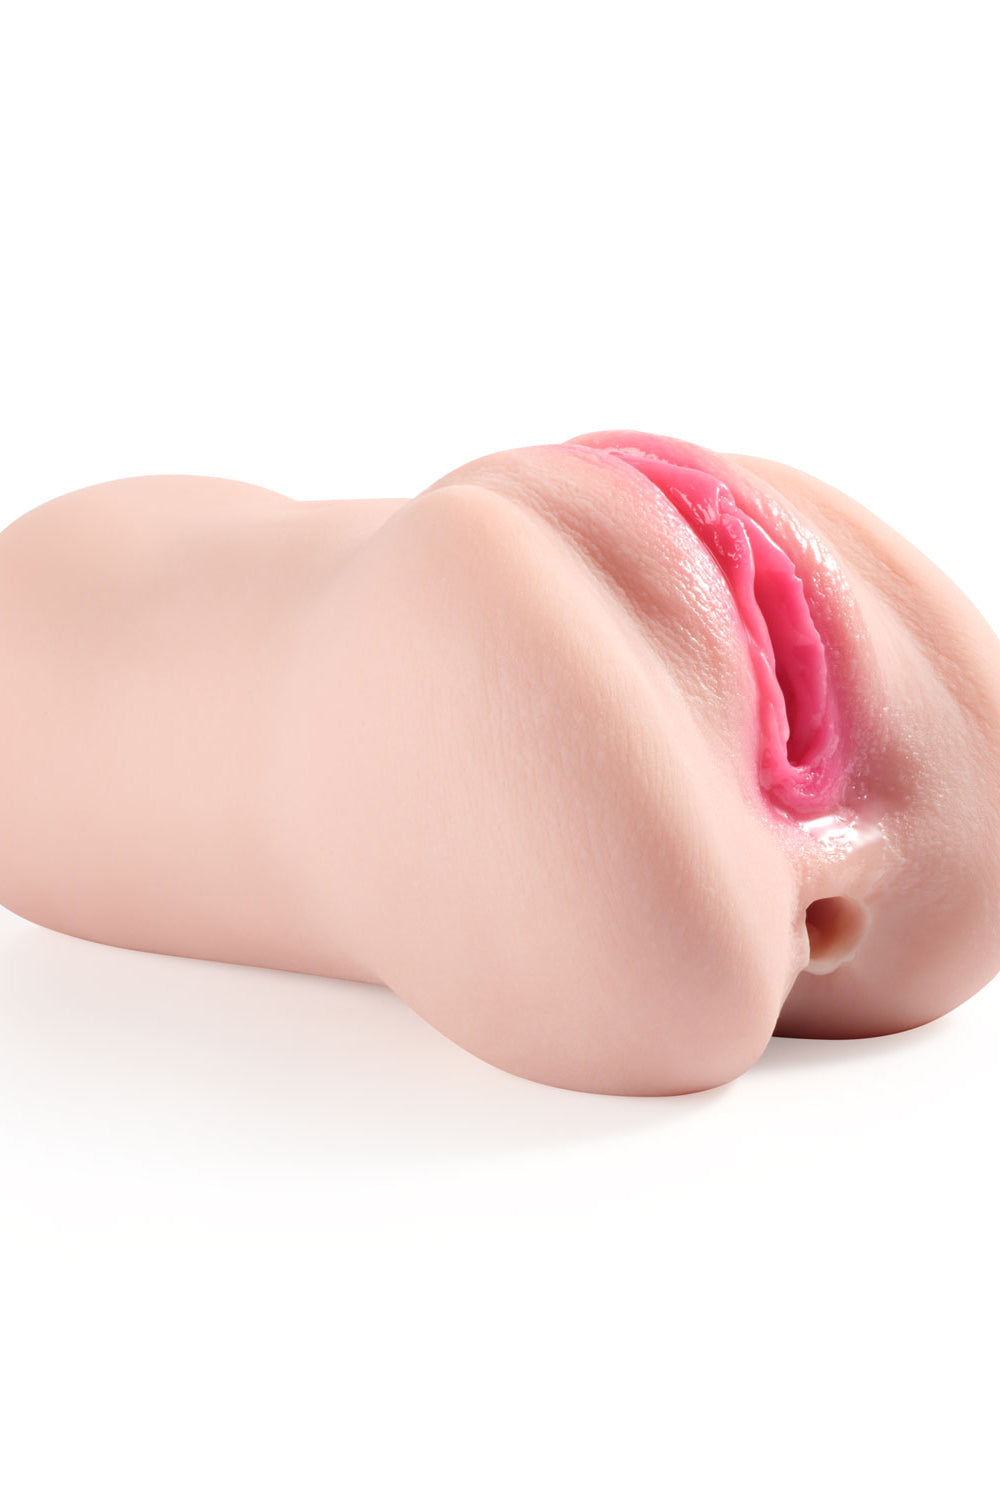 US Stock - TPE Pussy Sex Ass Torso Dolls Adult Love Doll Torso Realistic Masturbator Sex Toy for Men